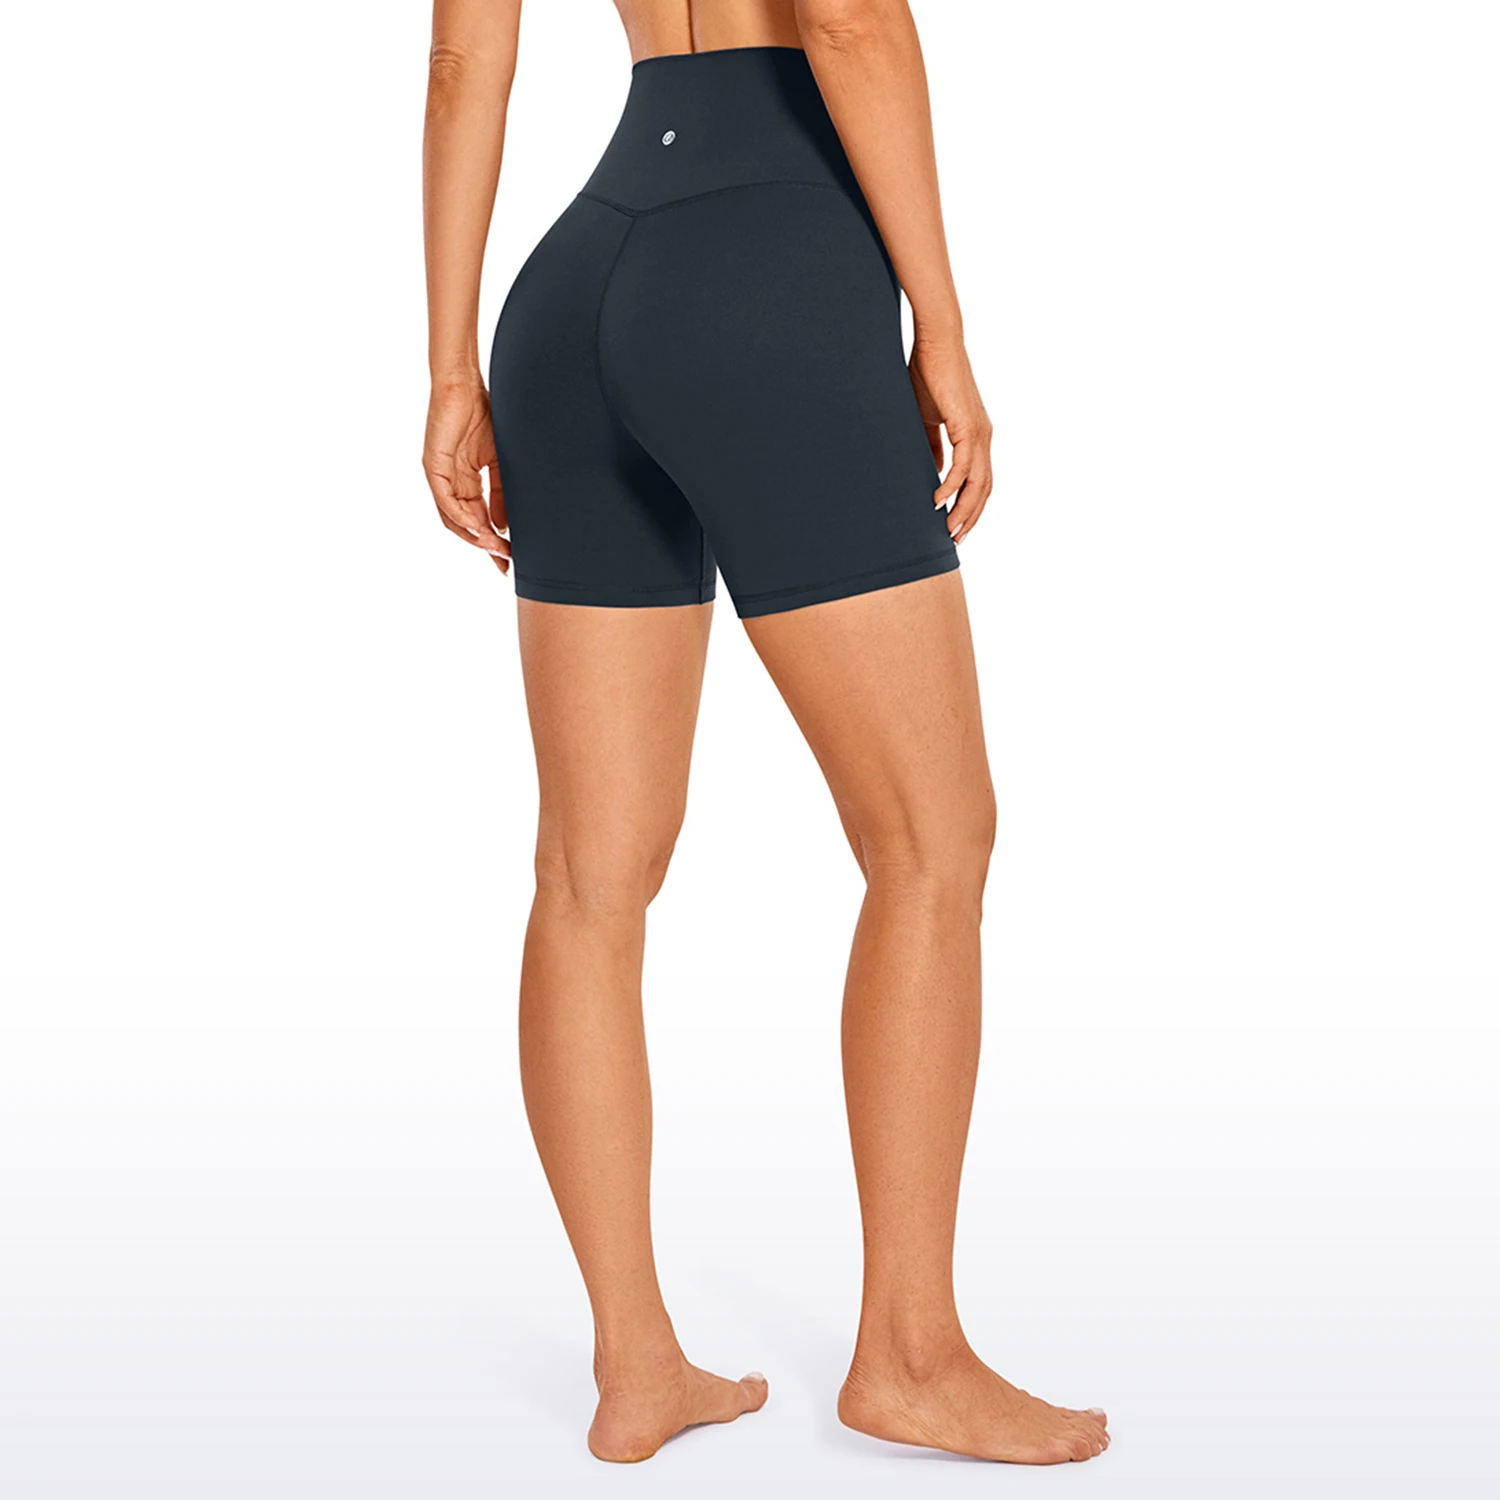 https://ae01.alicdn.com/kf/S805600800b014d4caec2a31c3cad25311/CRZ-YOGA-Womens-Butterluxe-Crossover-Biker-Shorts-5-Inches-Criss-Cross-High-Waisted-Workout-Yoga-Shorts.jpg